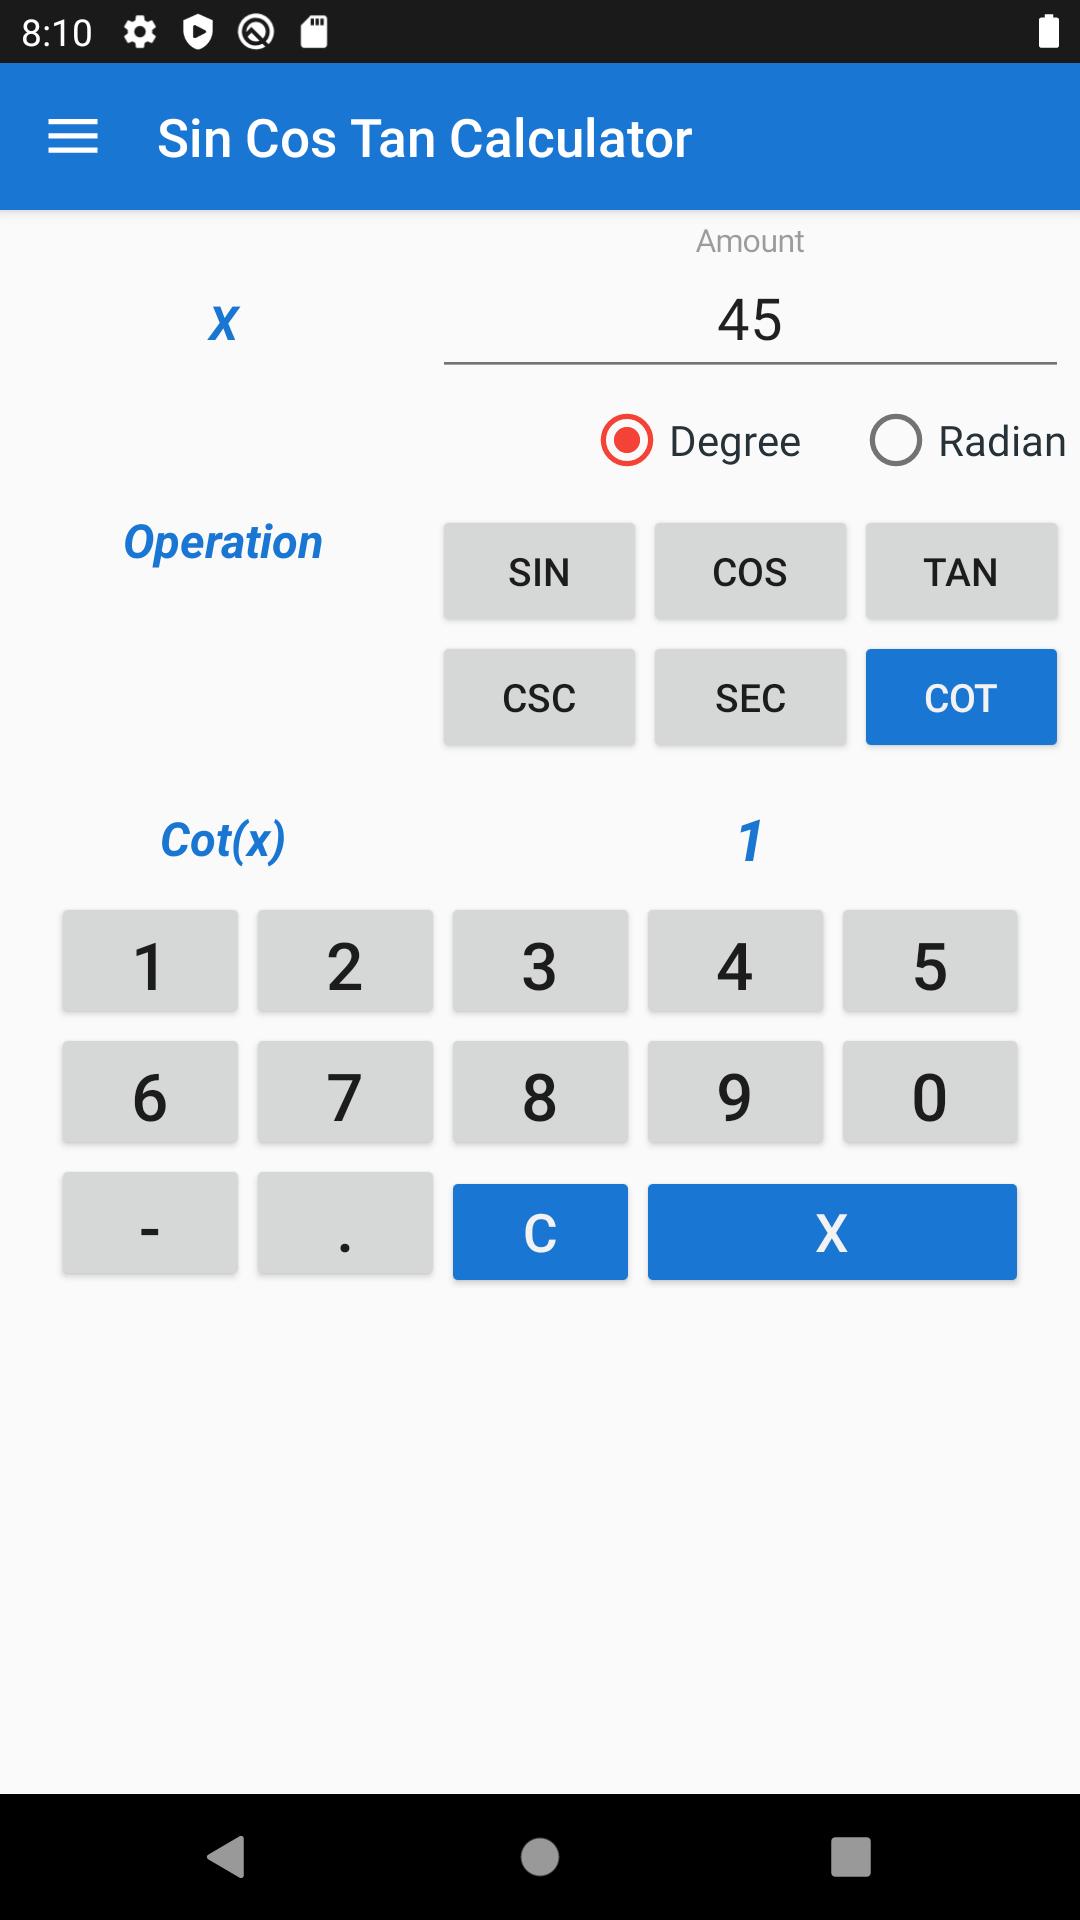 Download do APK de Calculadora Sin Cos Tan para Android